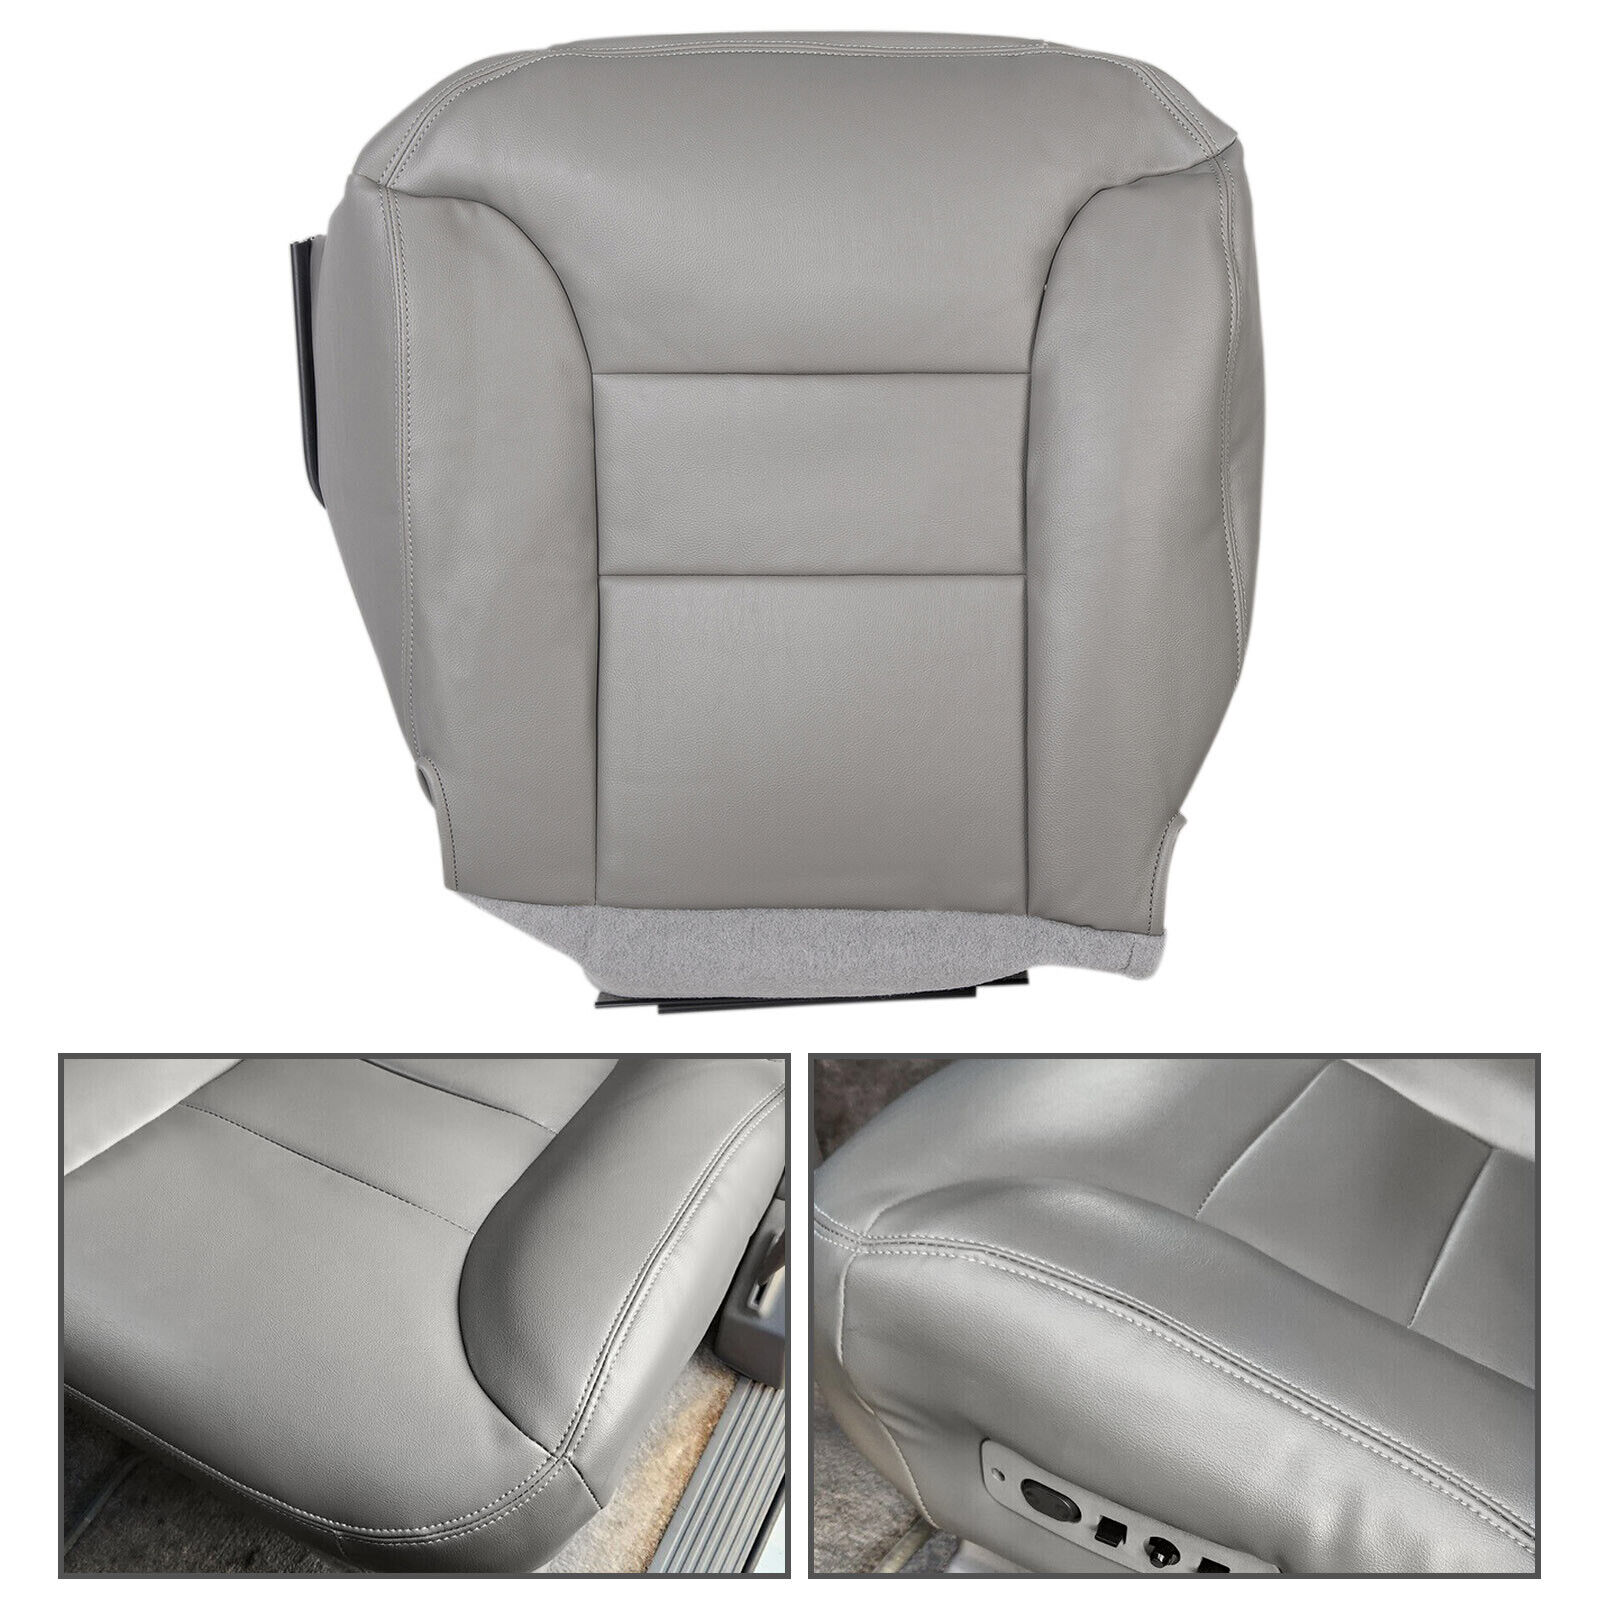 Driver Bottom Seat Cover For 95-99 Chevy Tahoe Suburban Silverado LT LS